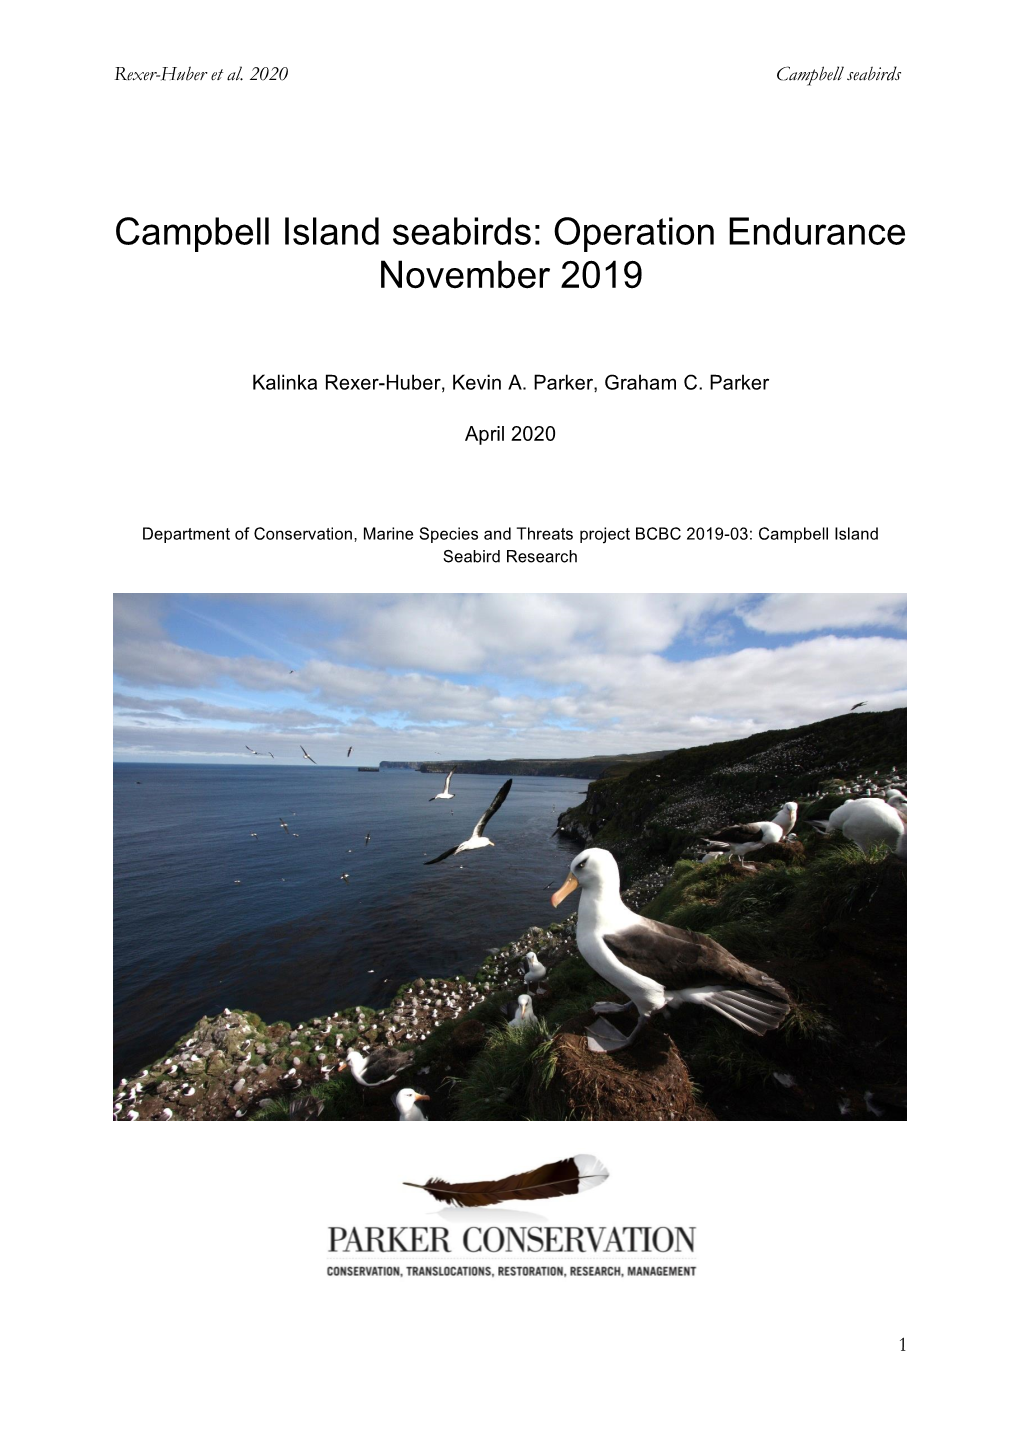 Campbell Island Seabirds: Operation Endurance November 2019